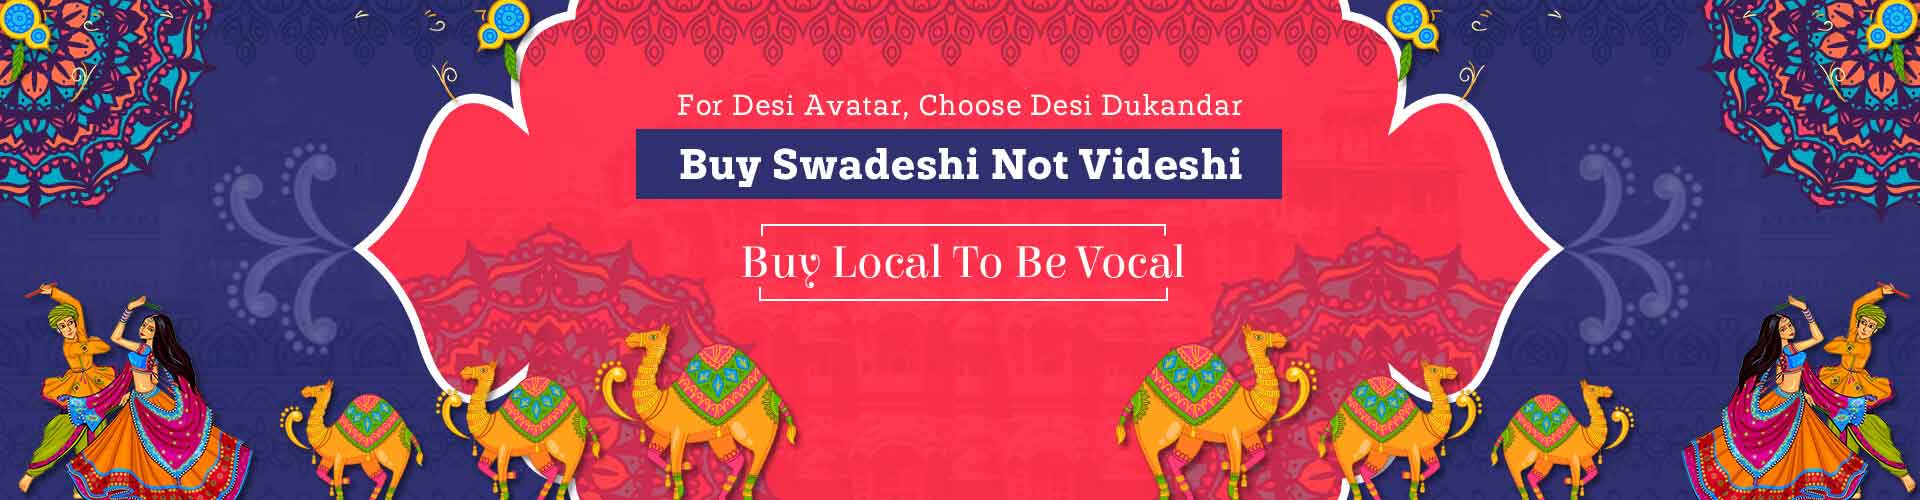 Buy Swadeshi Not Videshi